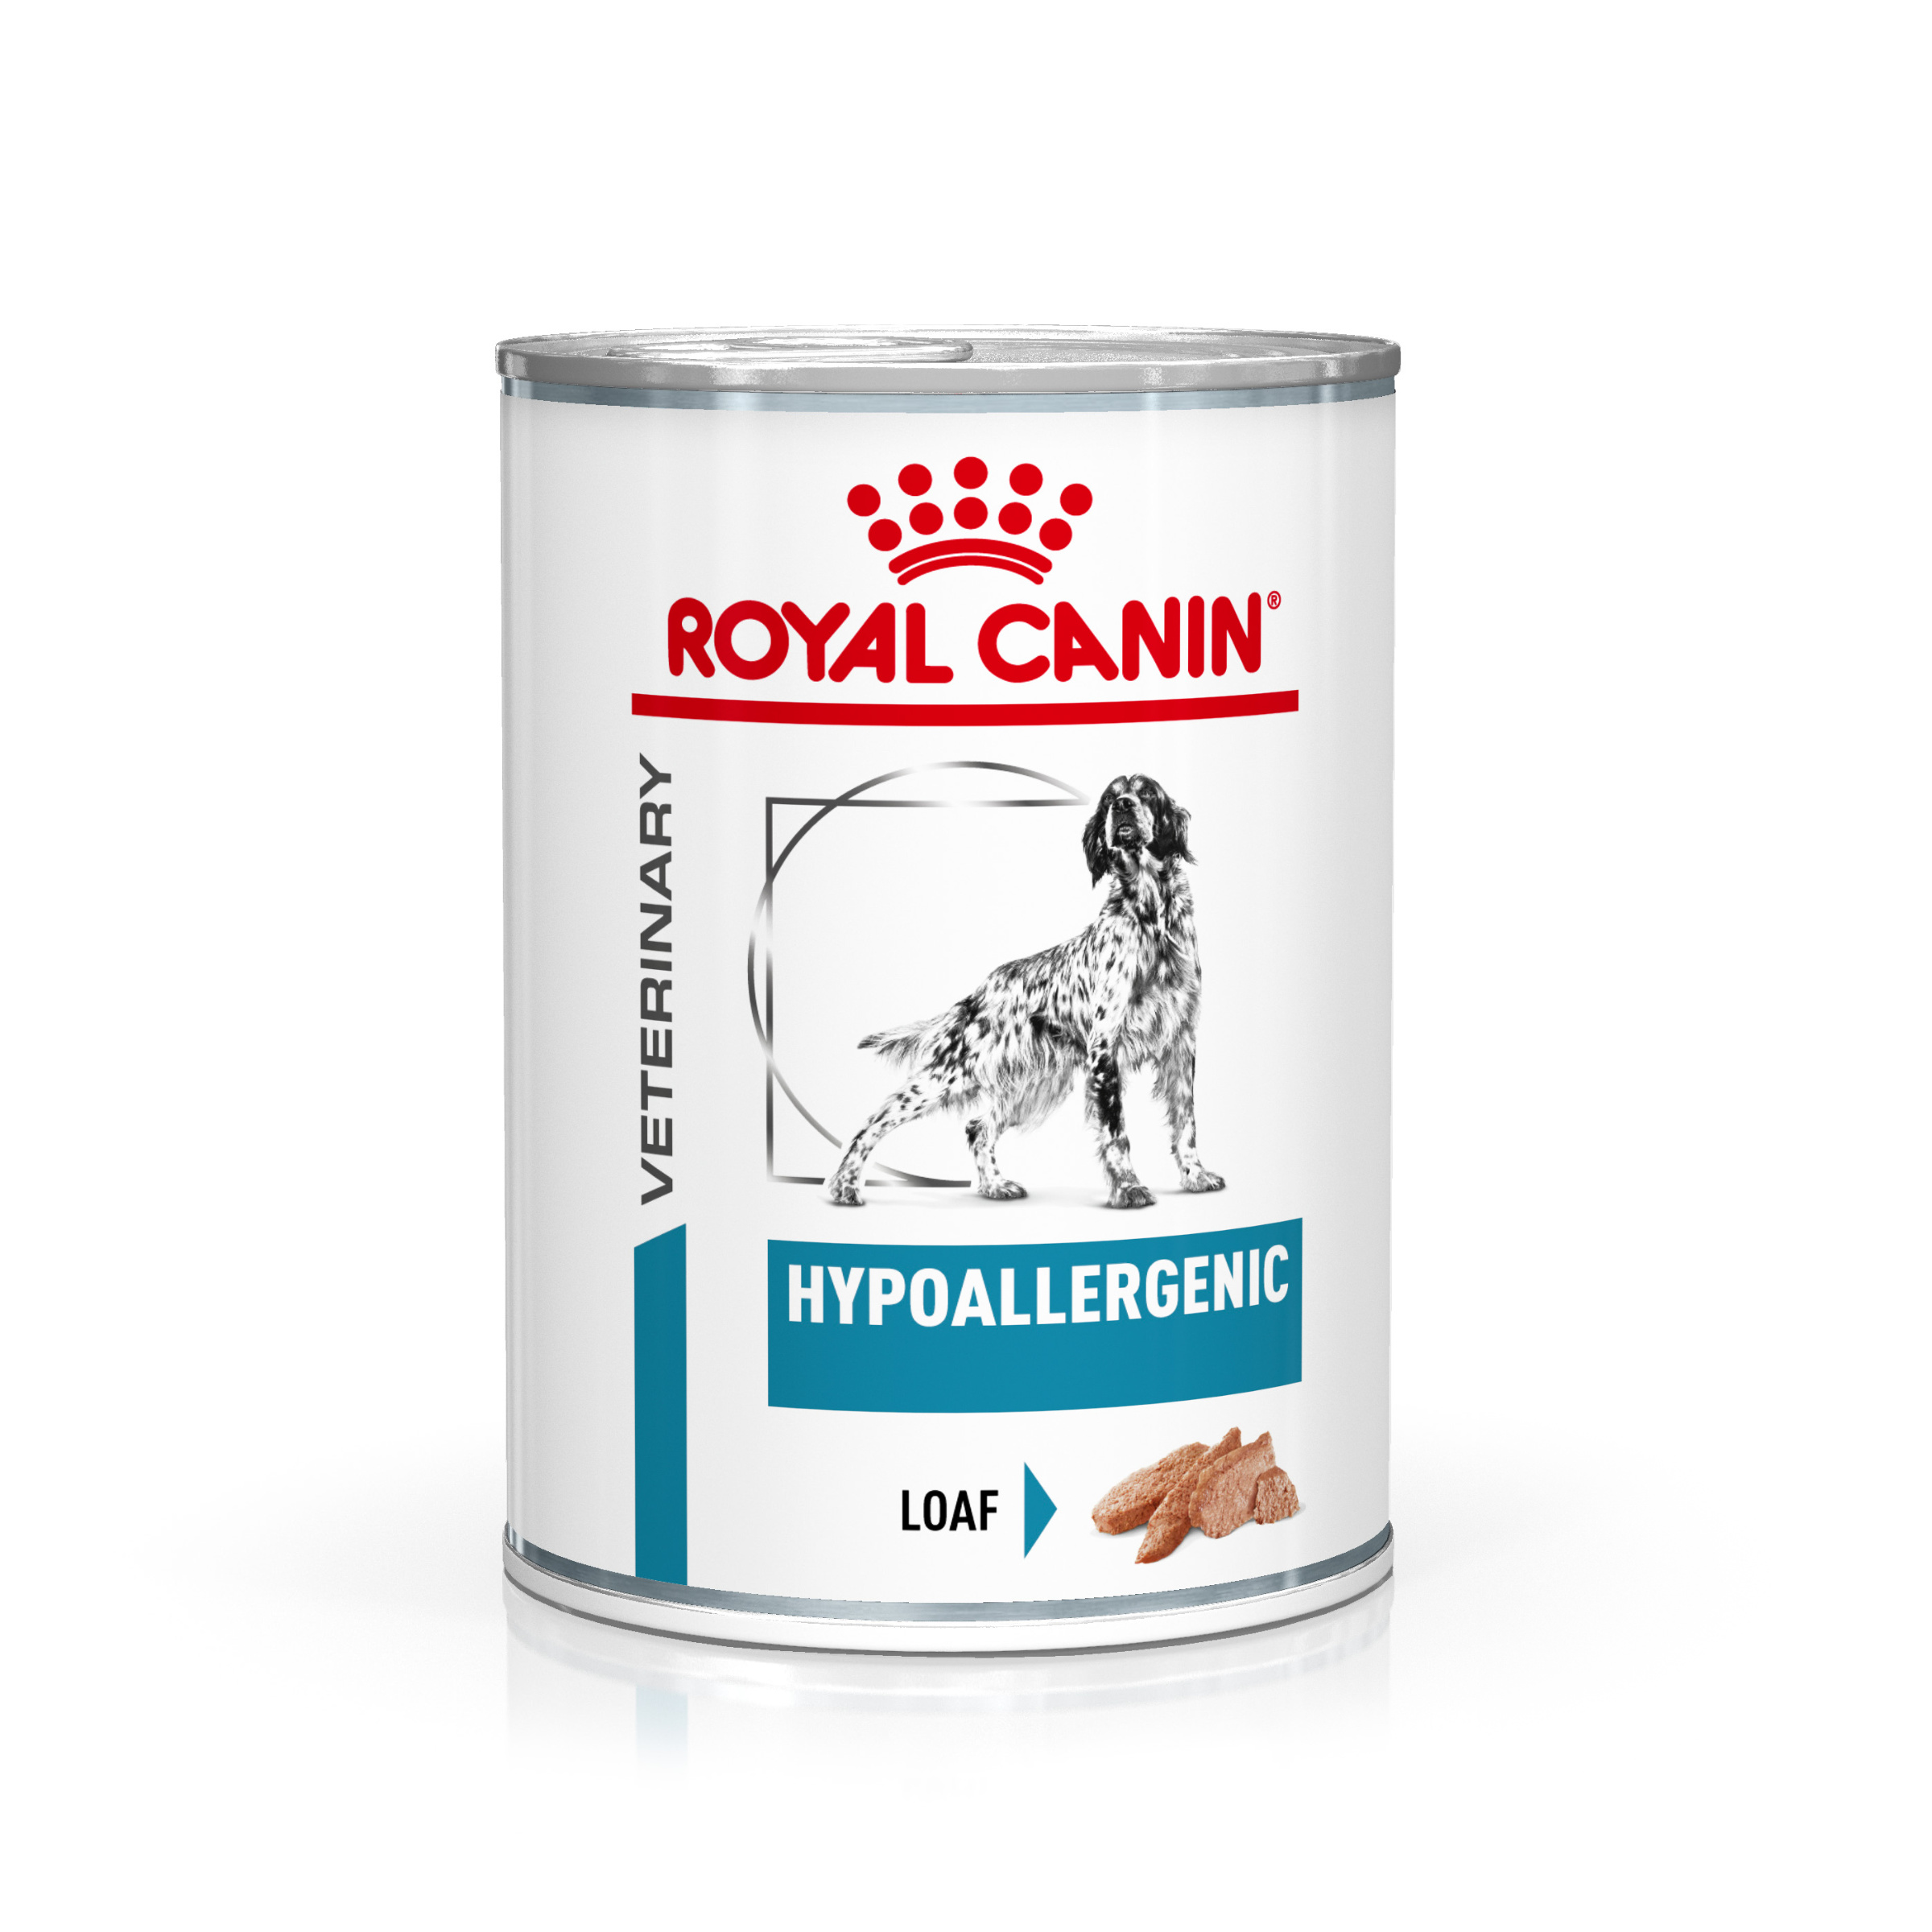 ROYAL CANIN Veterinary HYPOALLERGENIC Mousse Nassfutter für Hunde 1 x 400g 